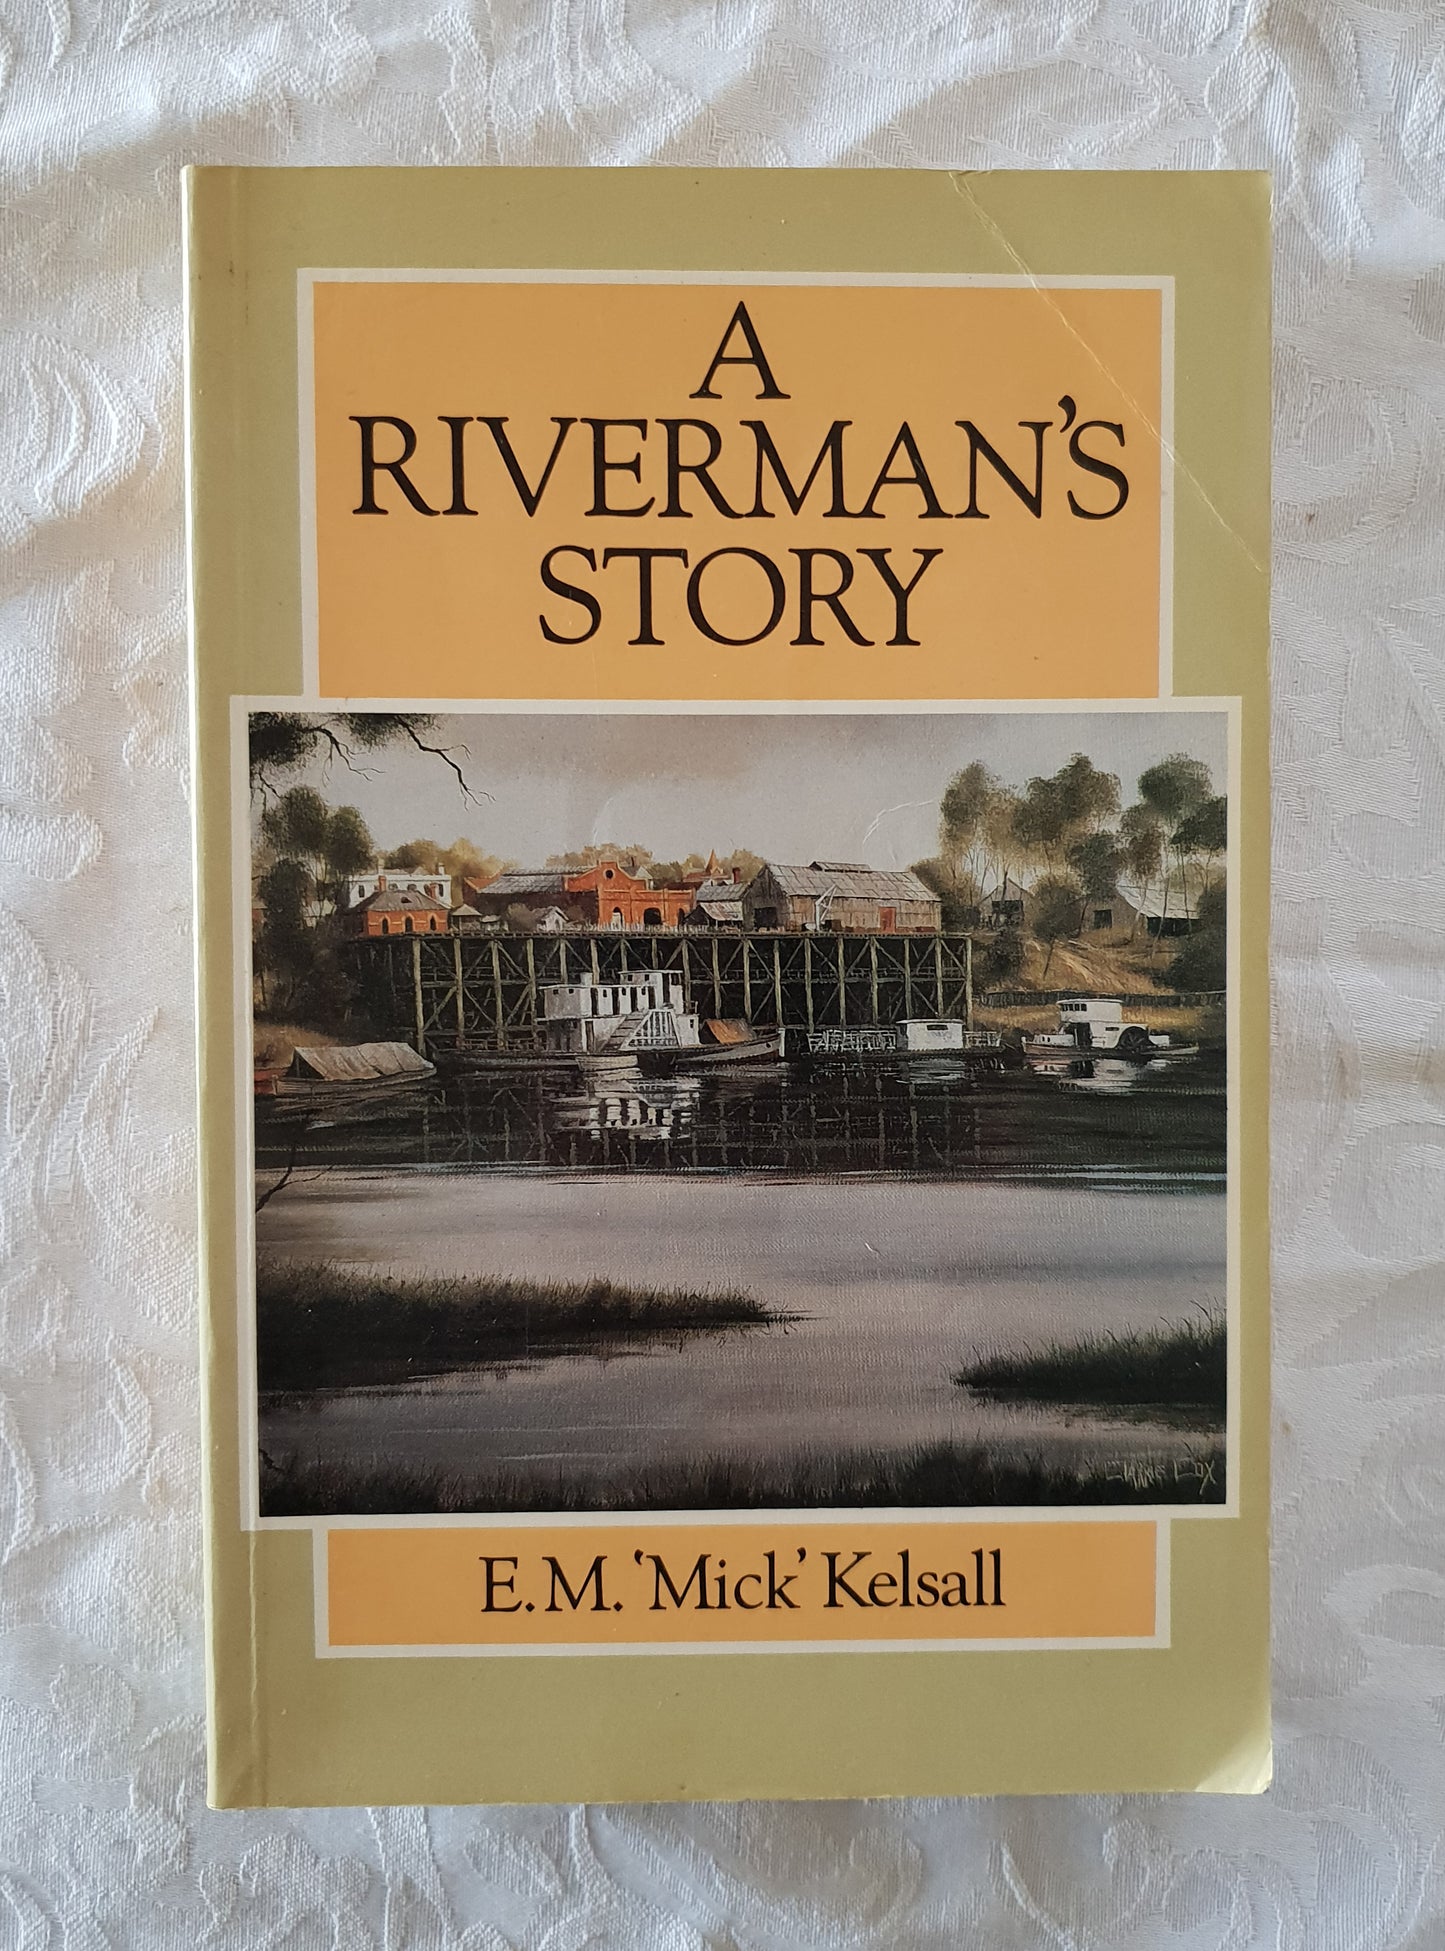 A Riverman's Story by E. M. 'Mick' Kelsall